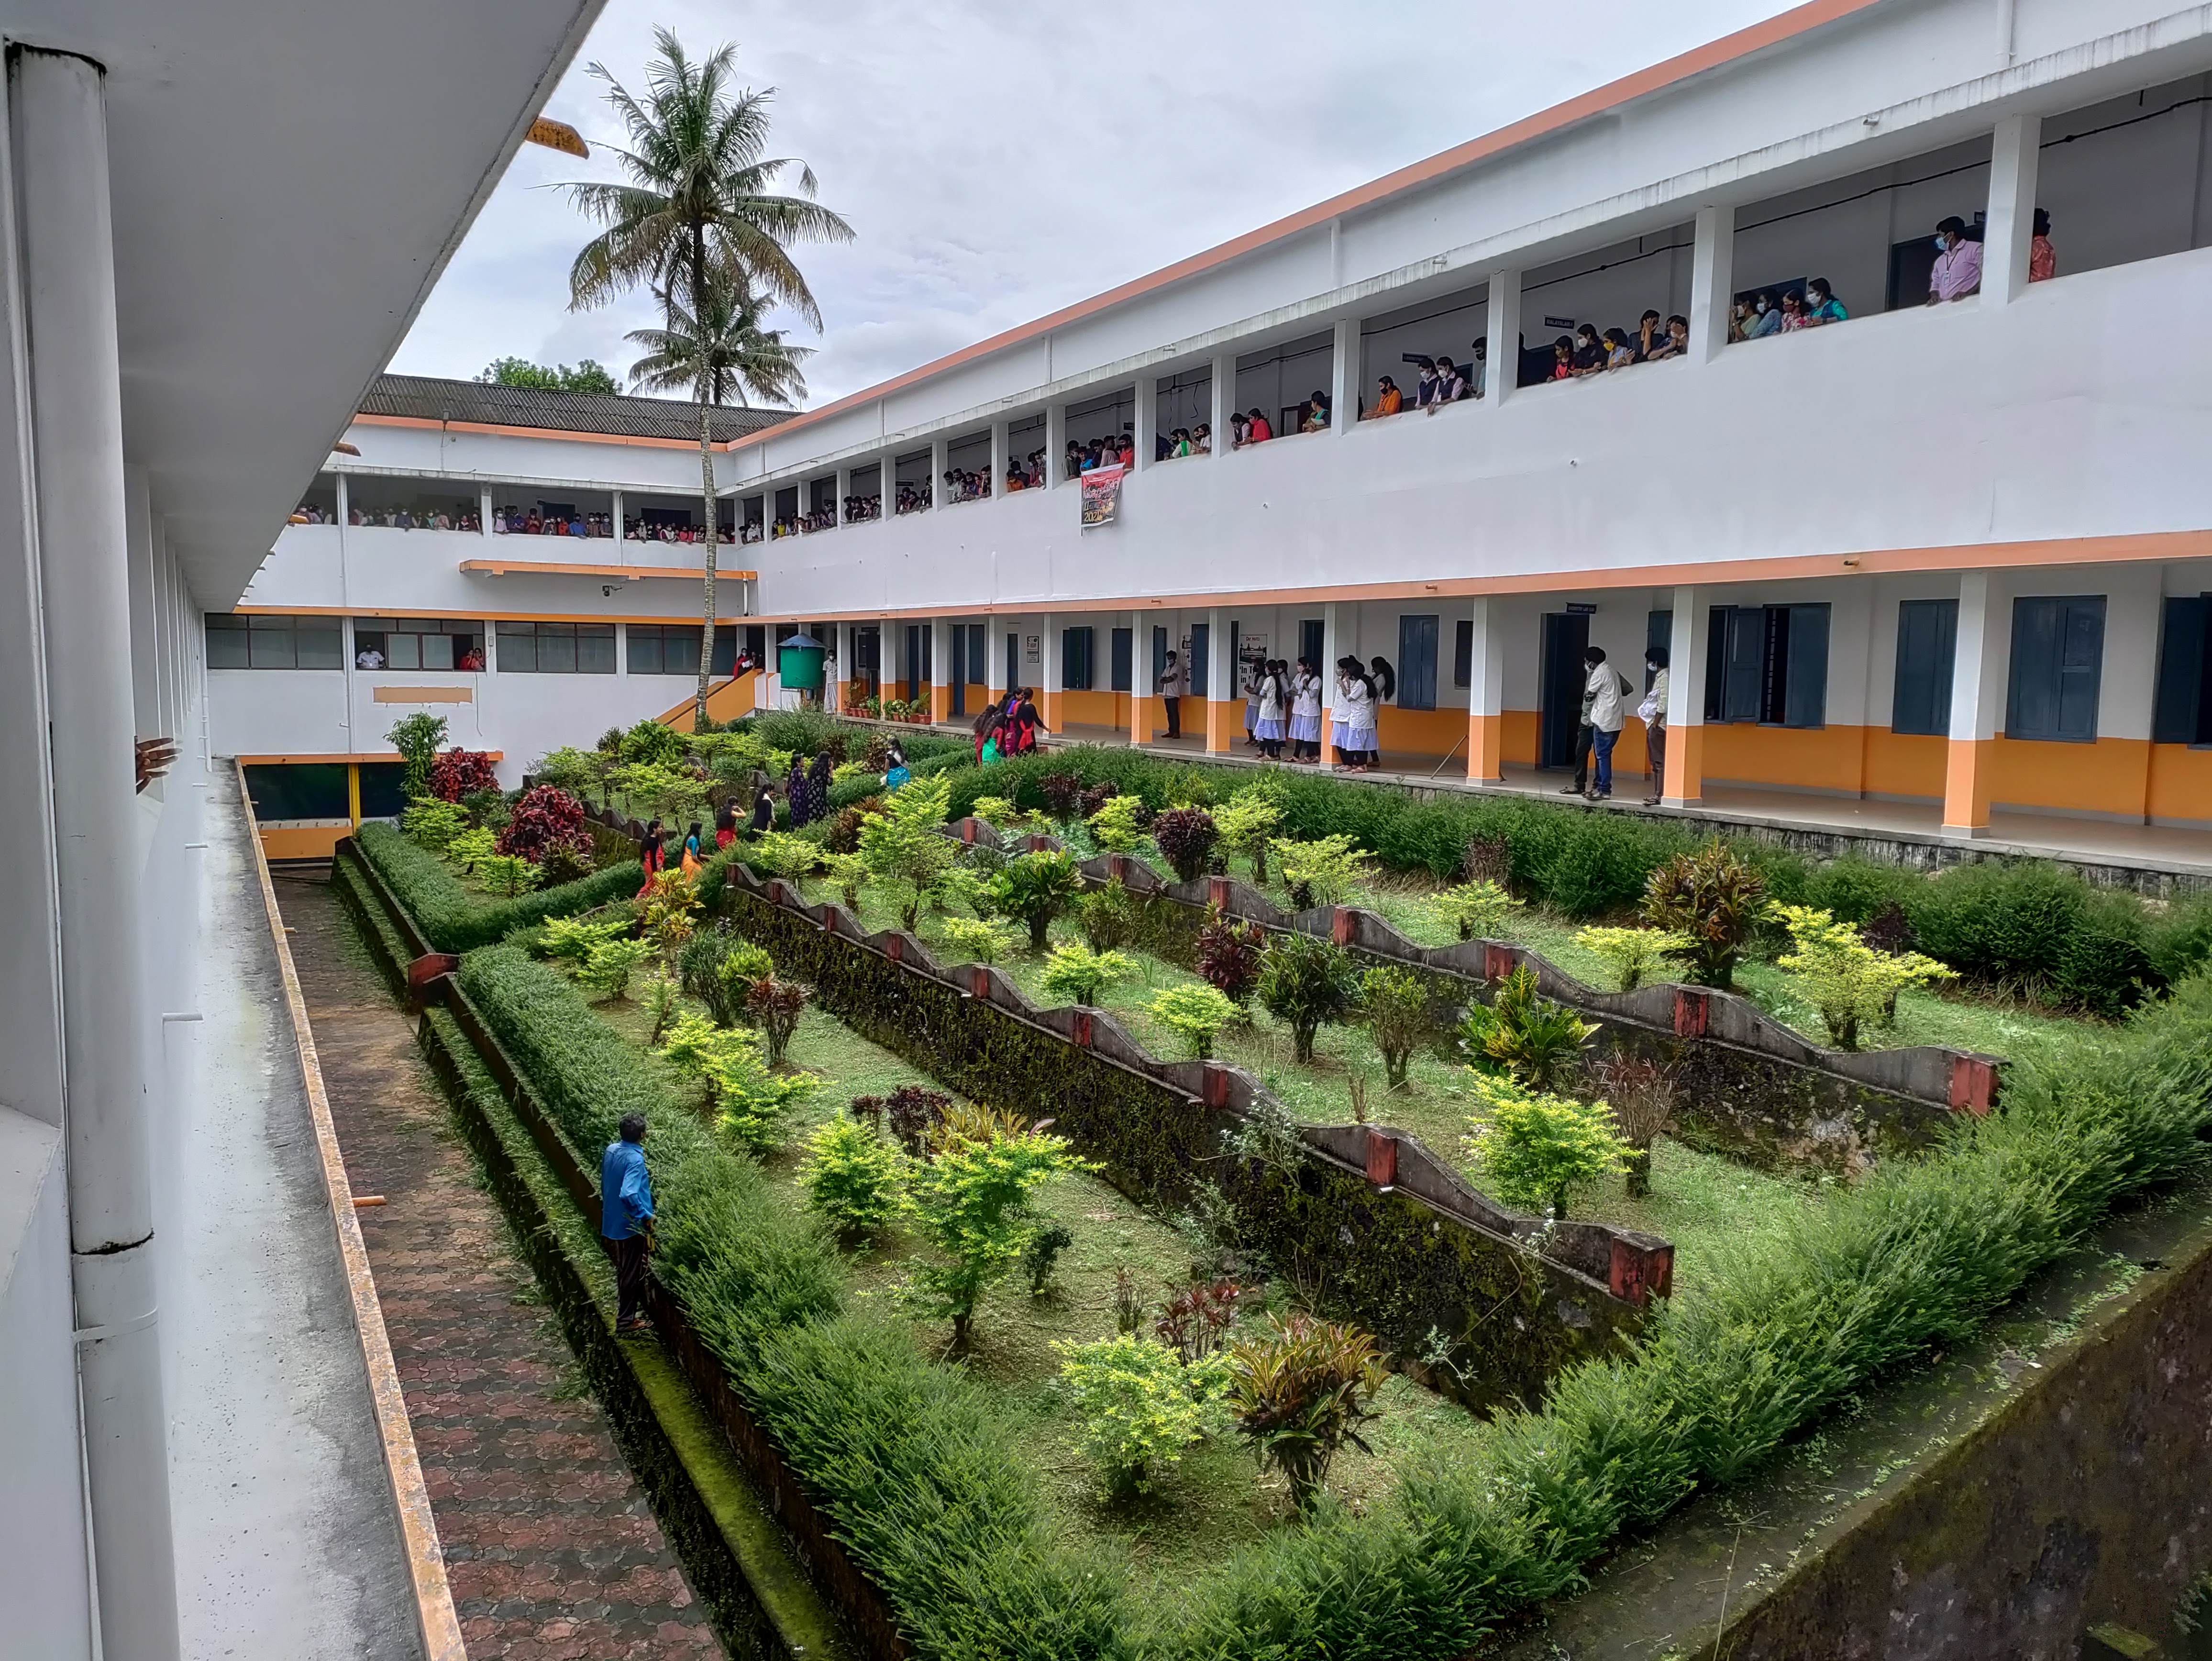 Pavanthma College